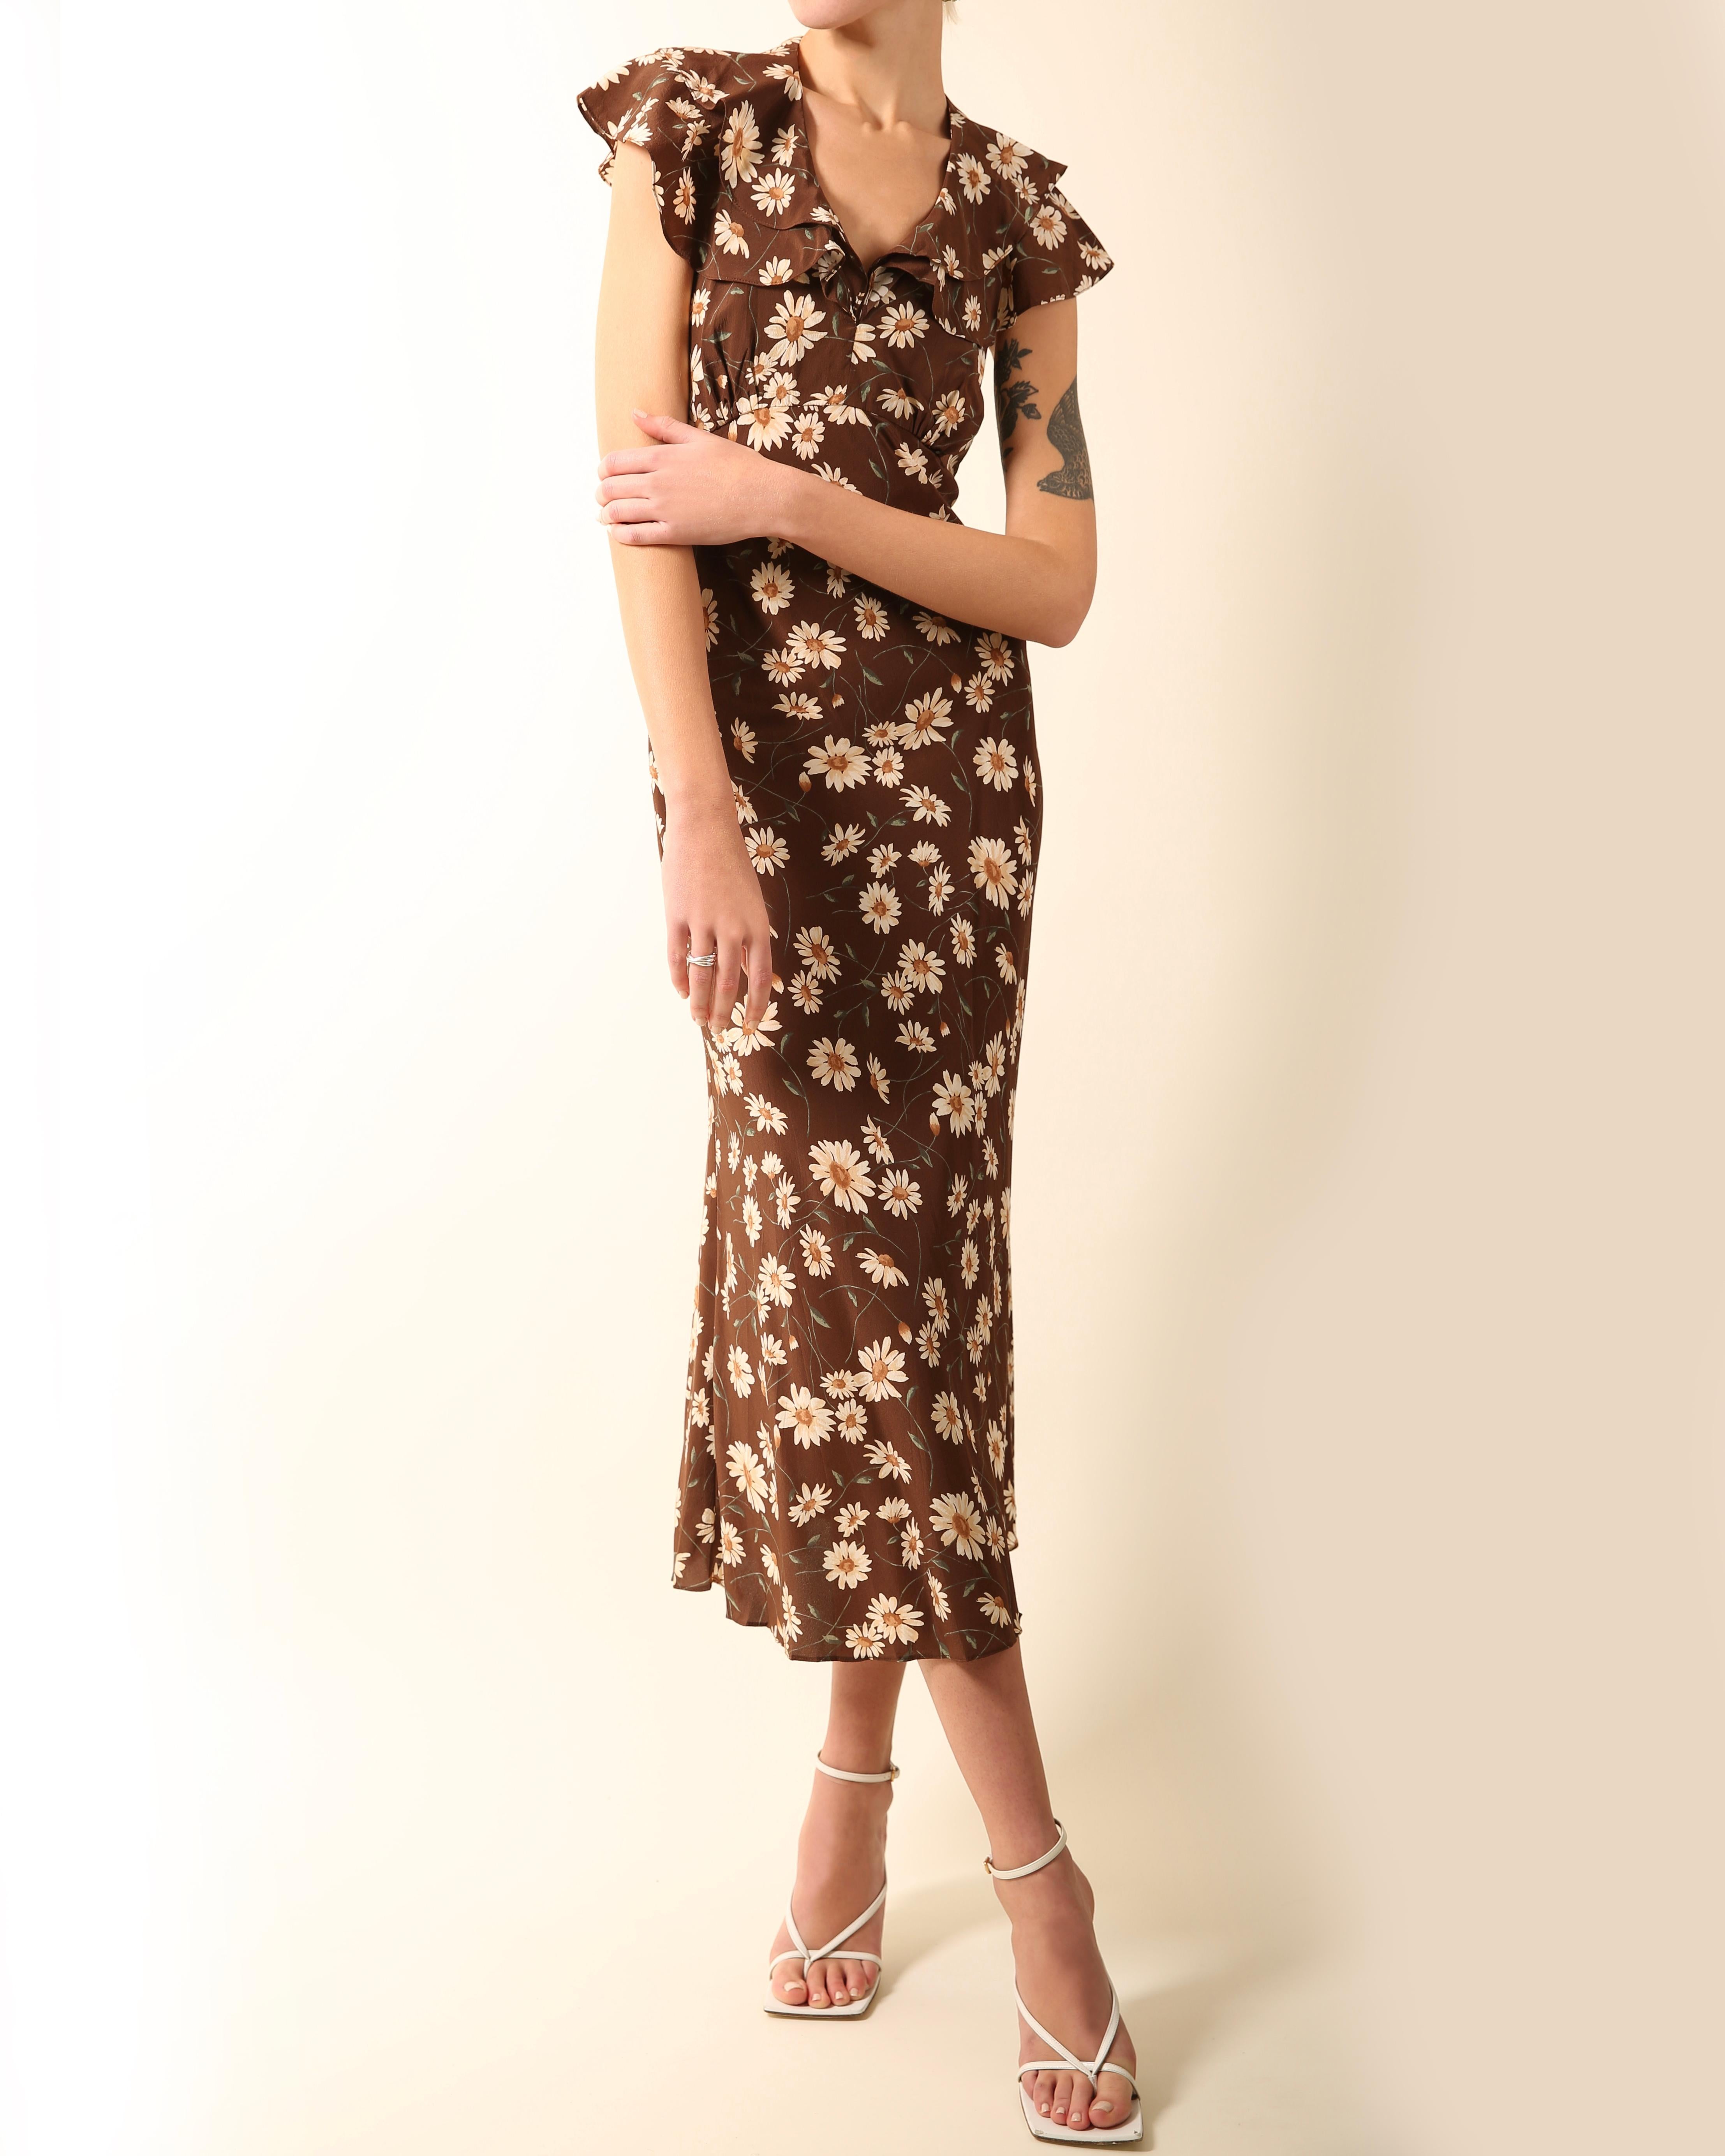 brown daisy dress